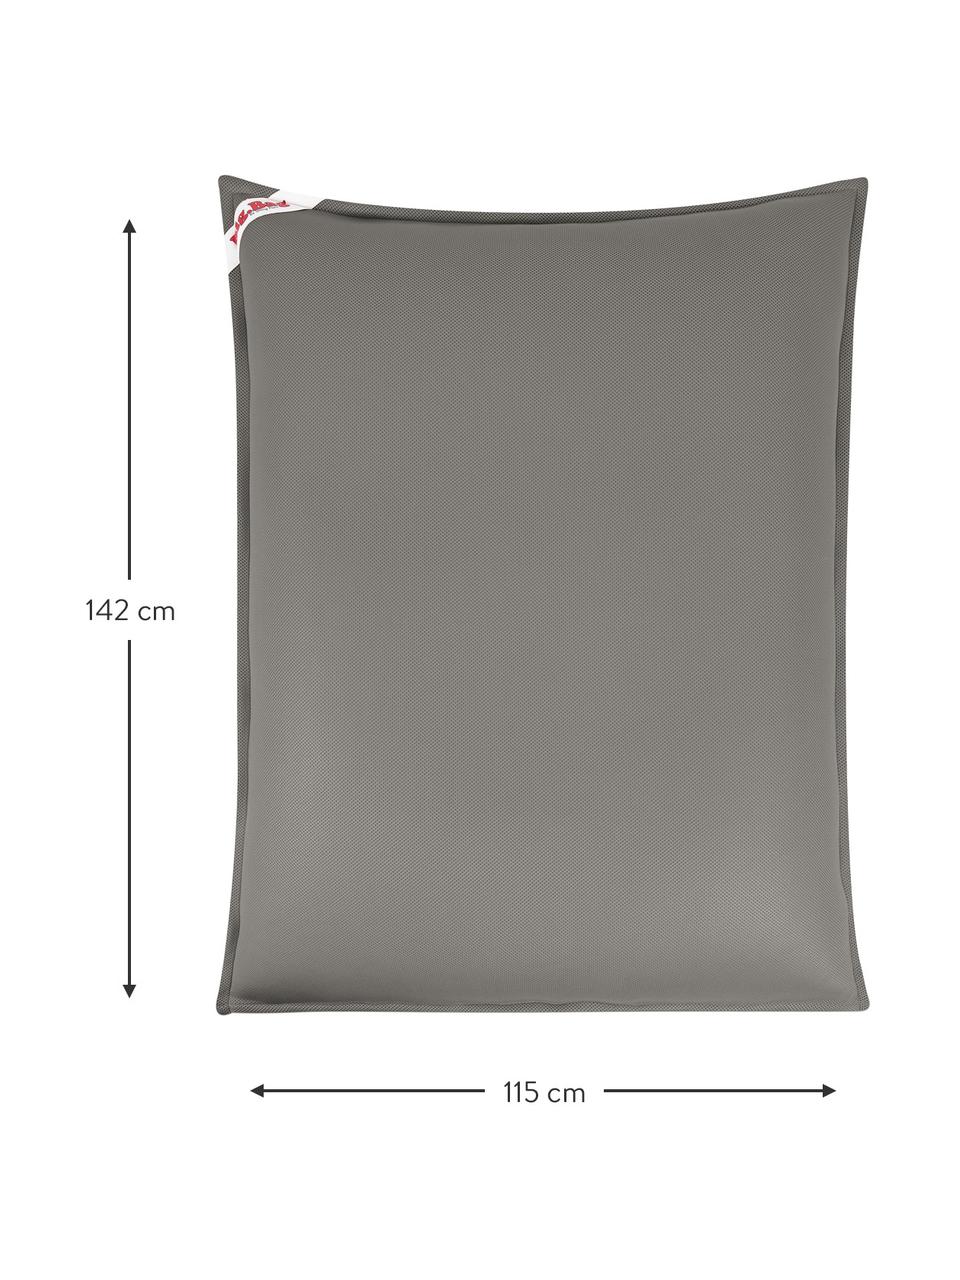 Zwembad zitzak Calypso, Bekleding: 100% polyester (mesh), Antraciet, L 142 x B 115 cm